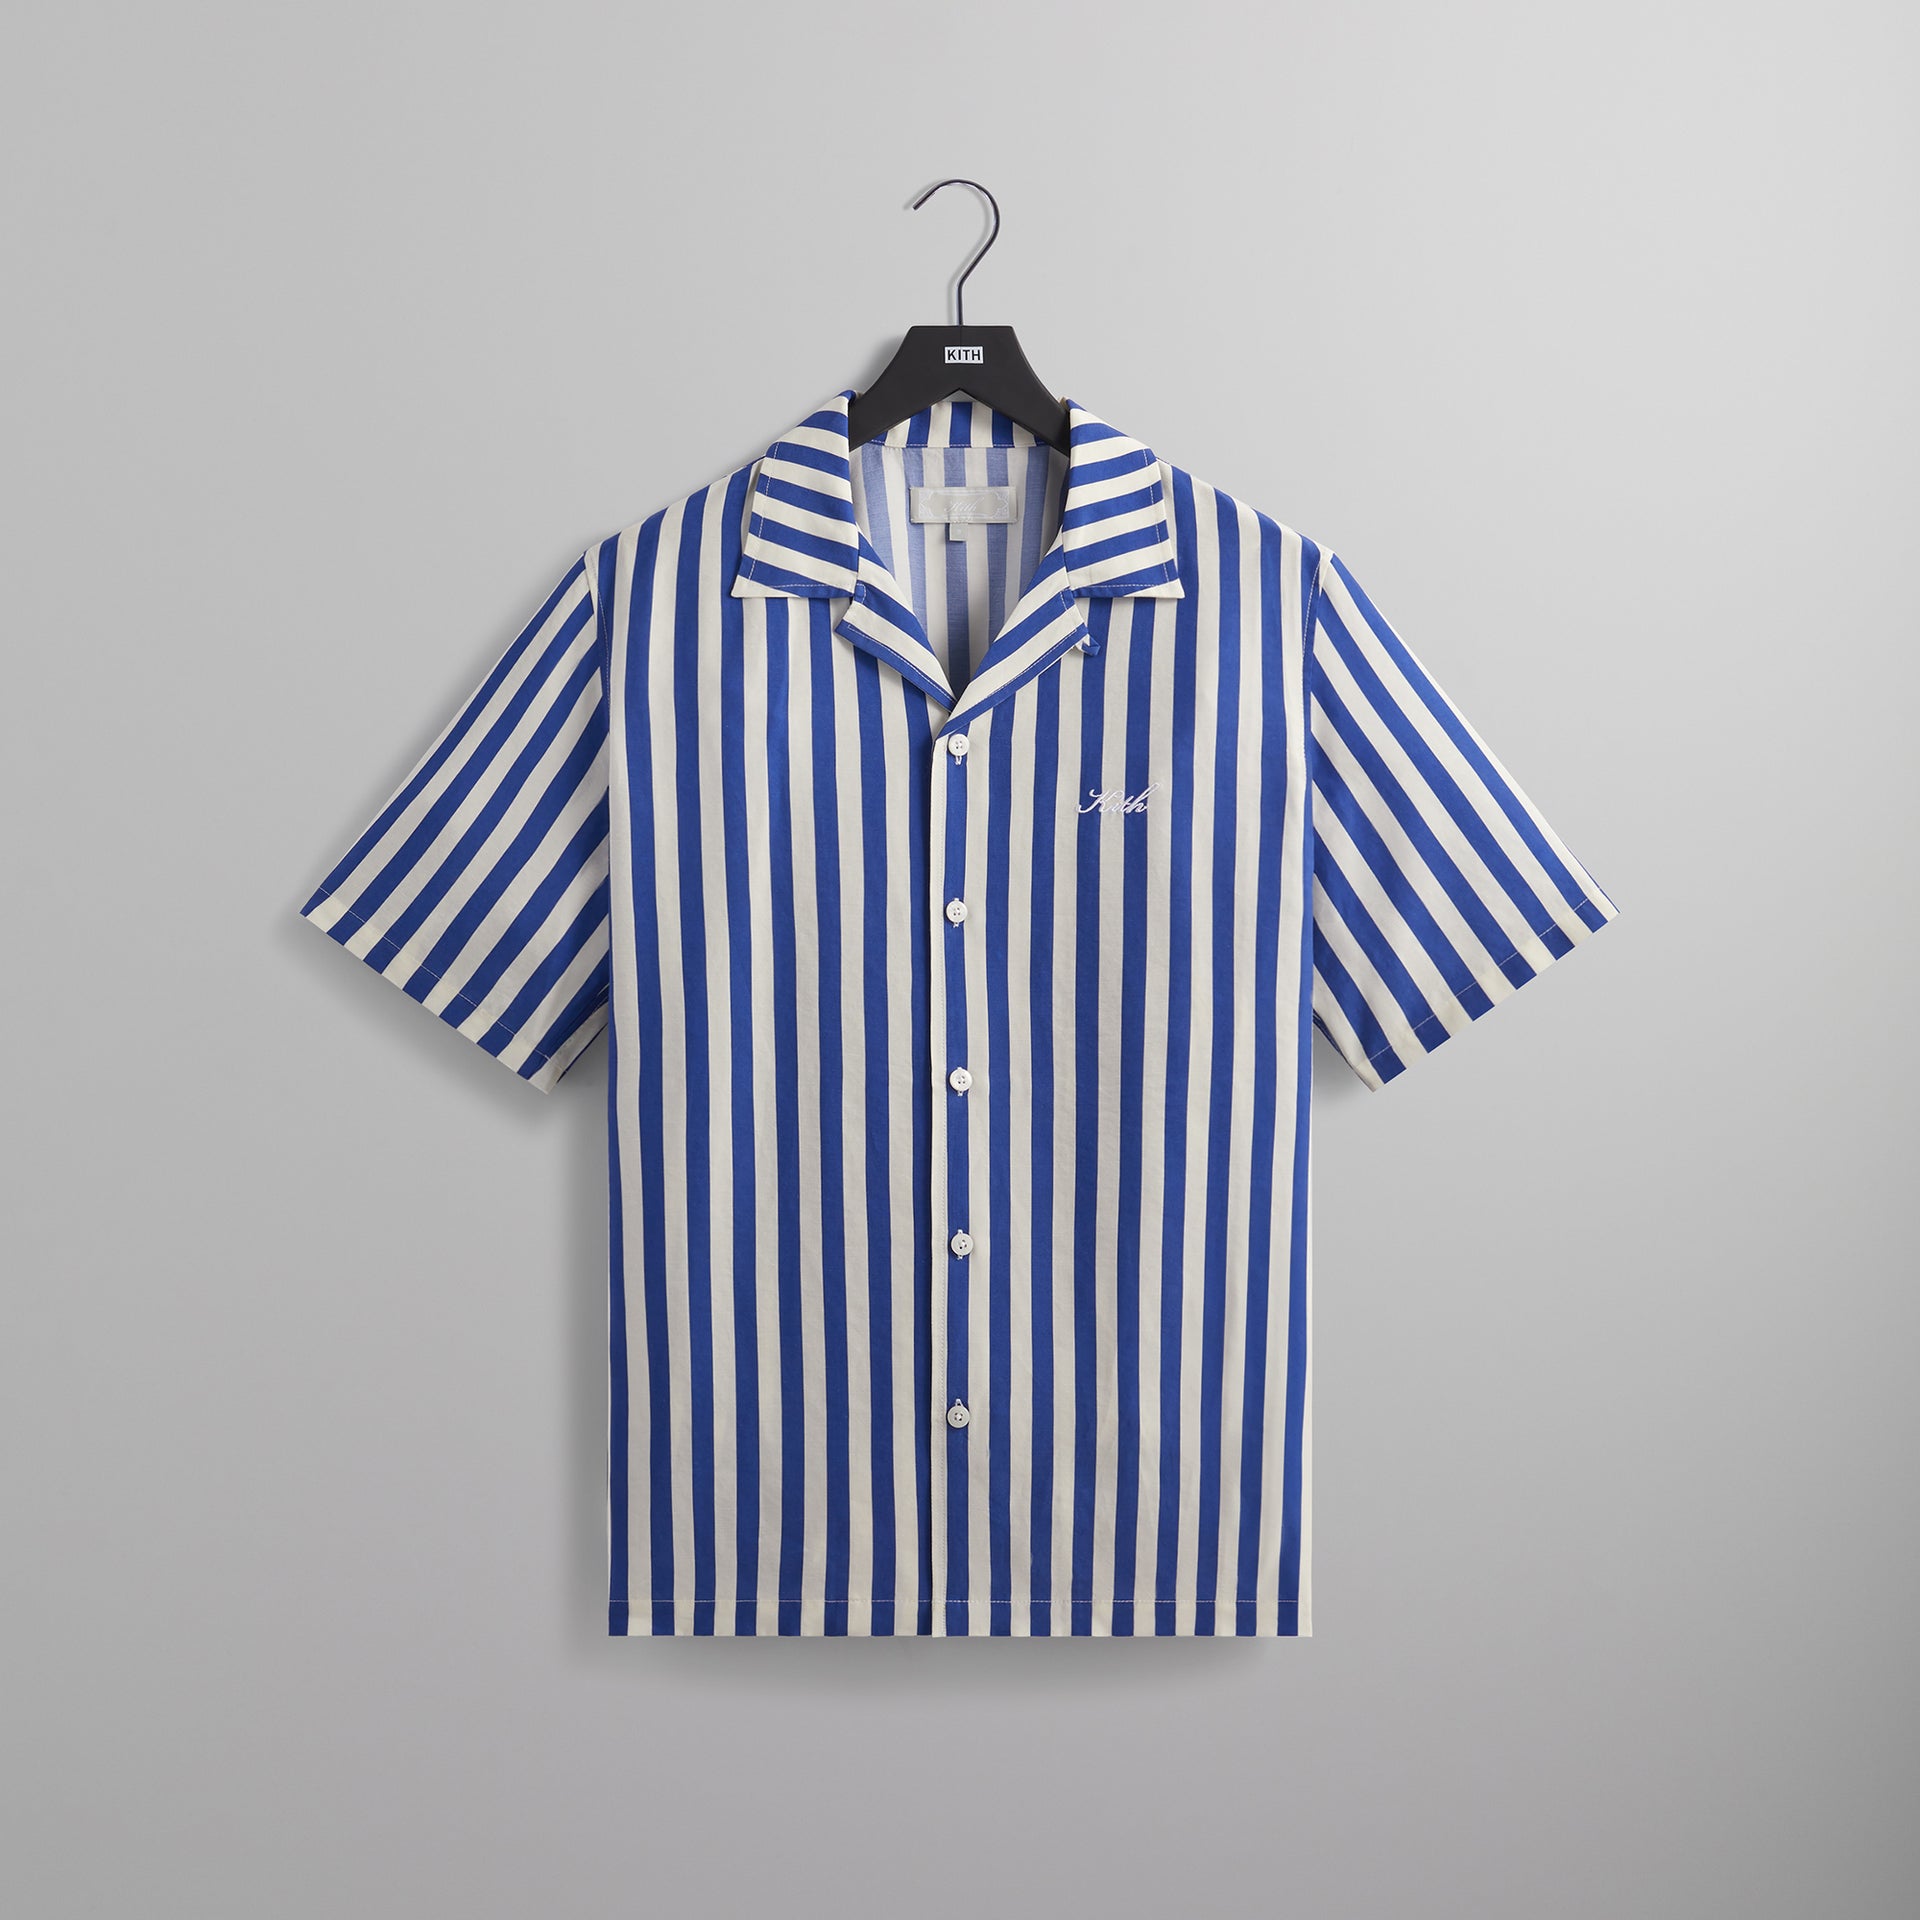 Kith Striped Thompson Camp Collar Shirt - Current